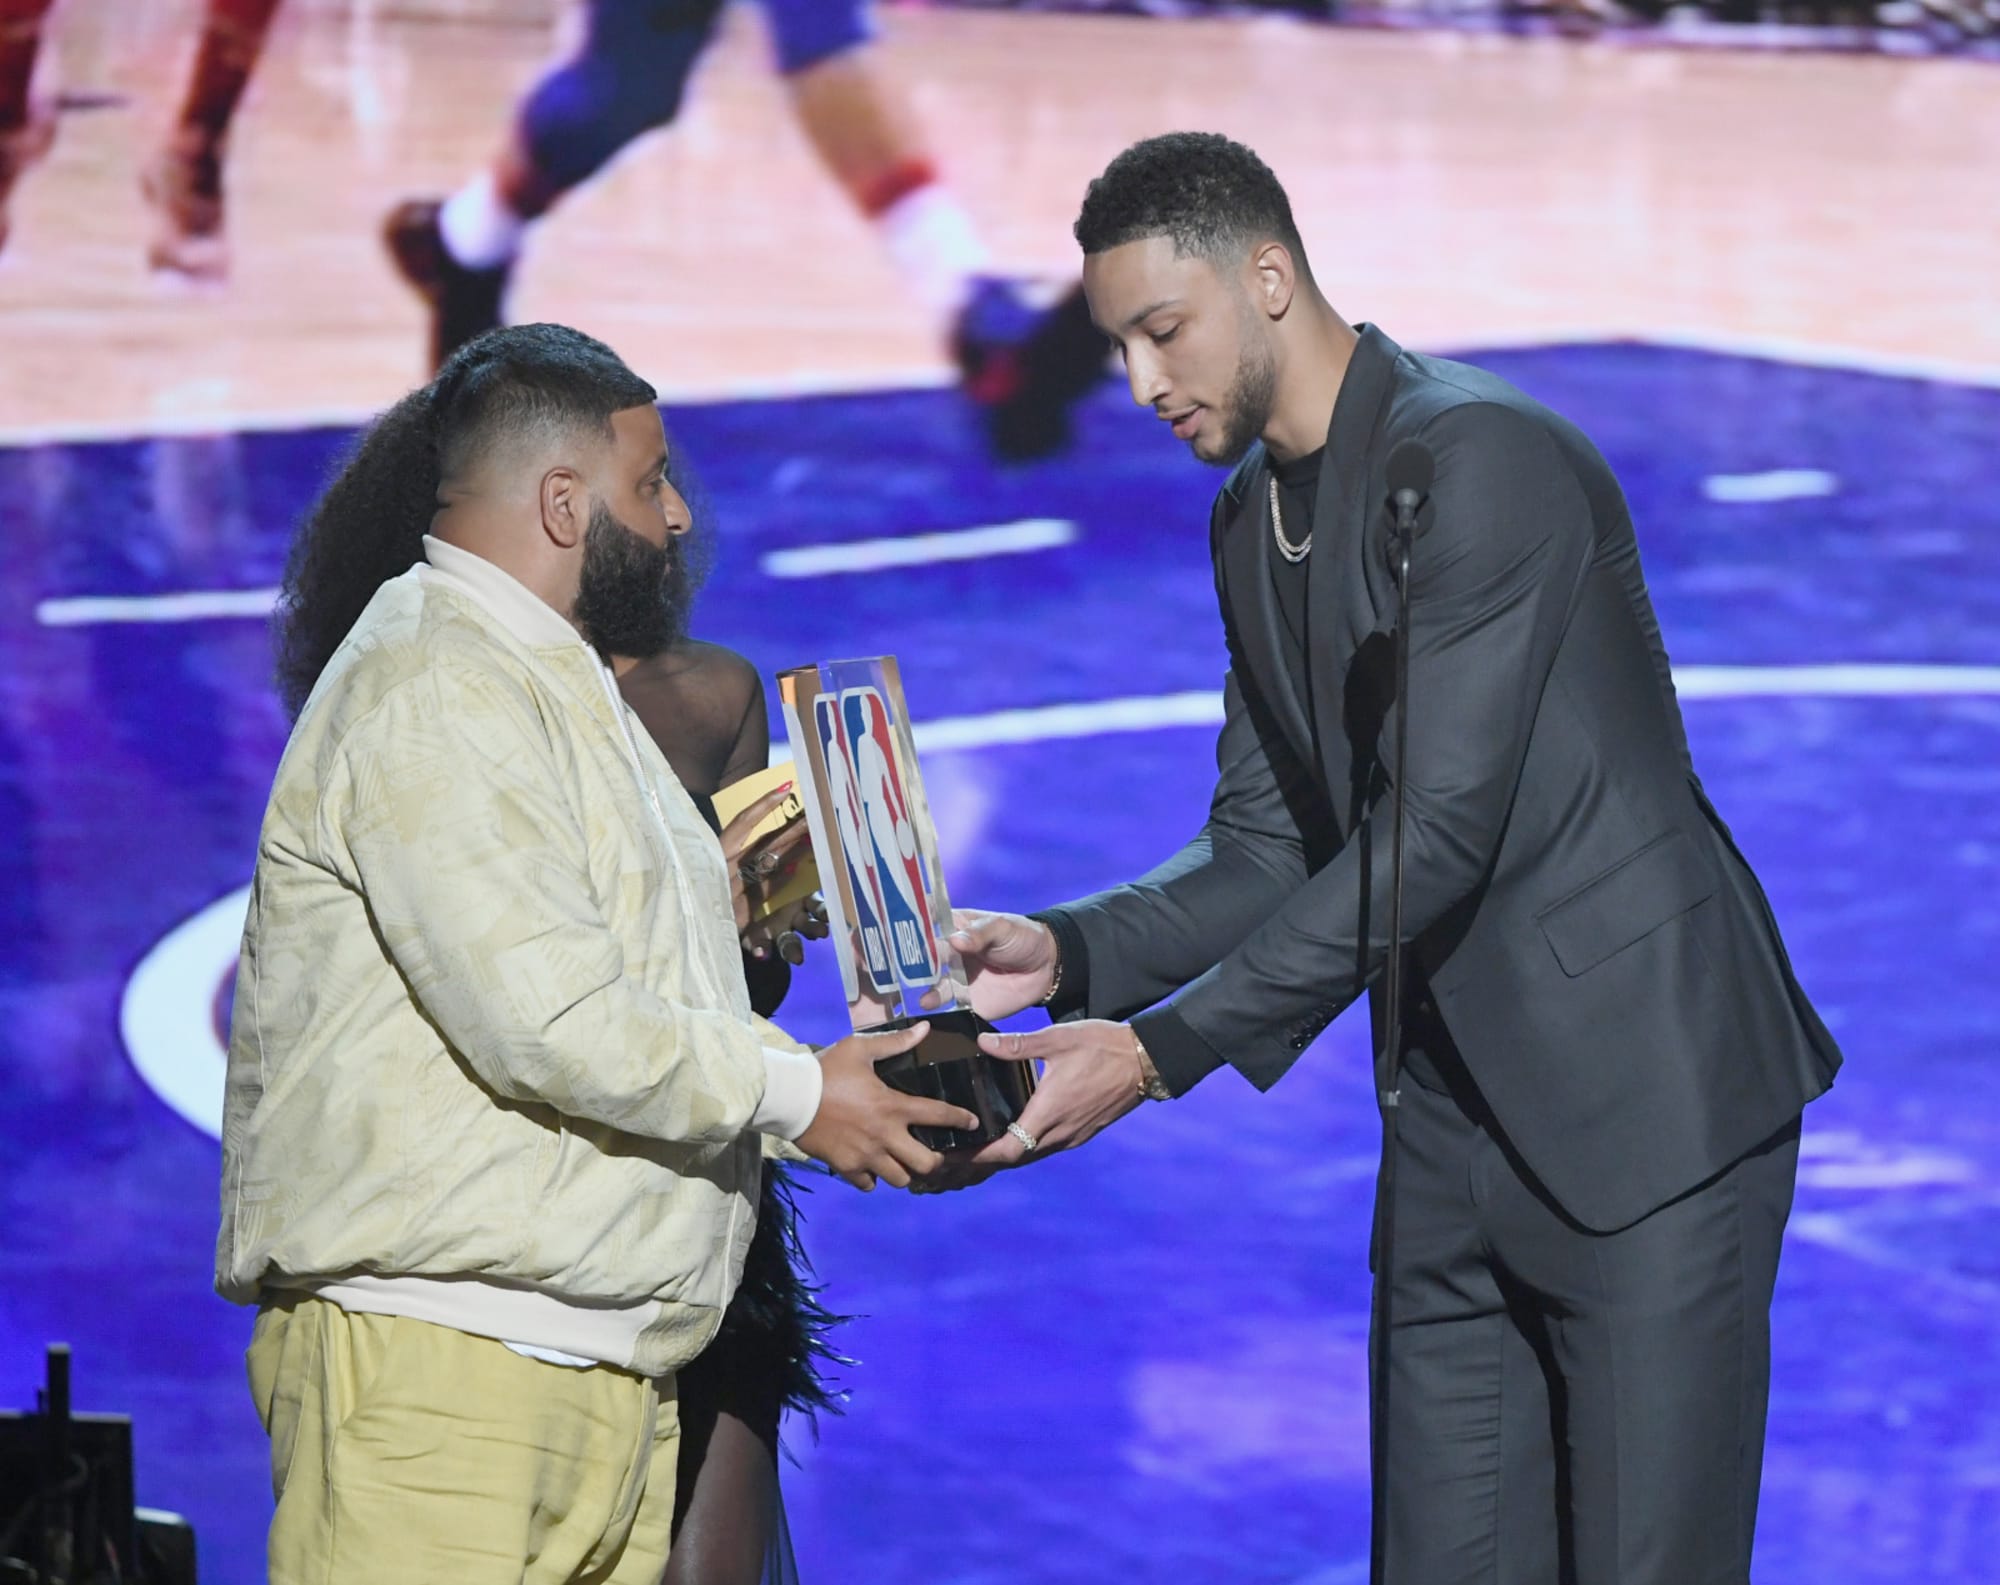 NBA Awards: LeBron James easily MVP over James Harden, Ben Simmons